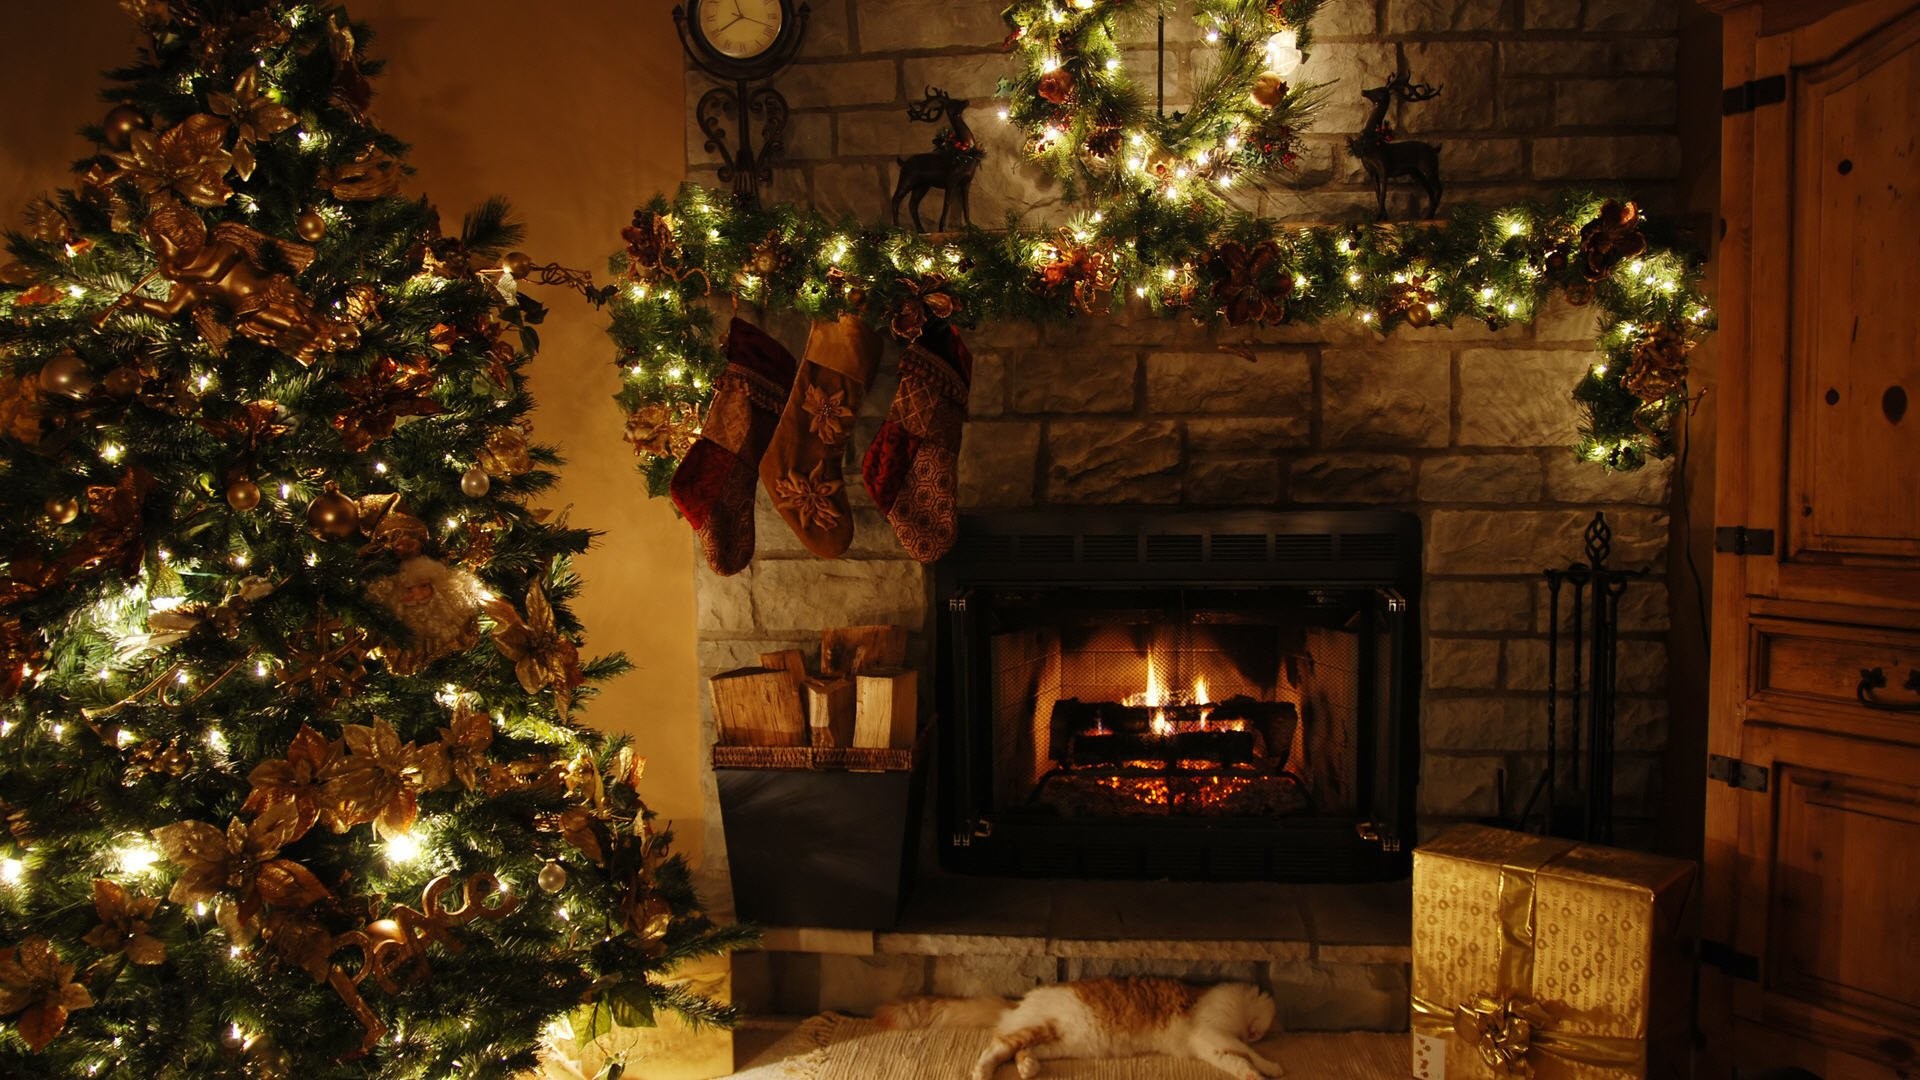 1920x1080 Christmas Fireplace 330467